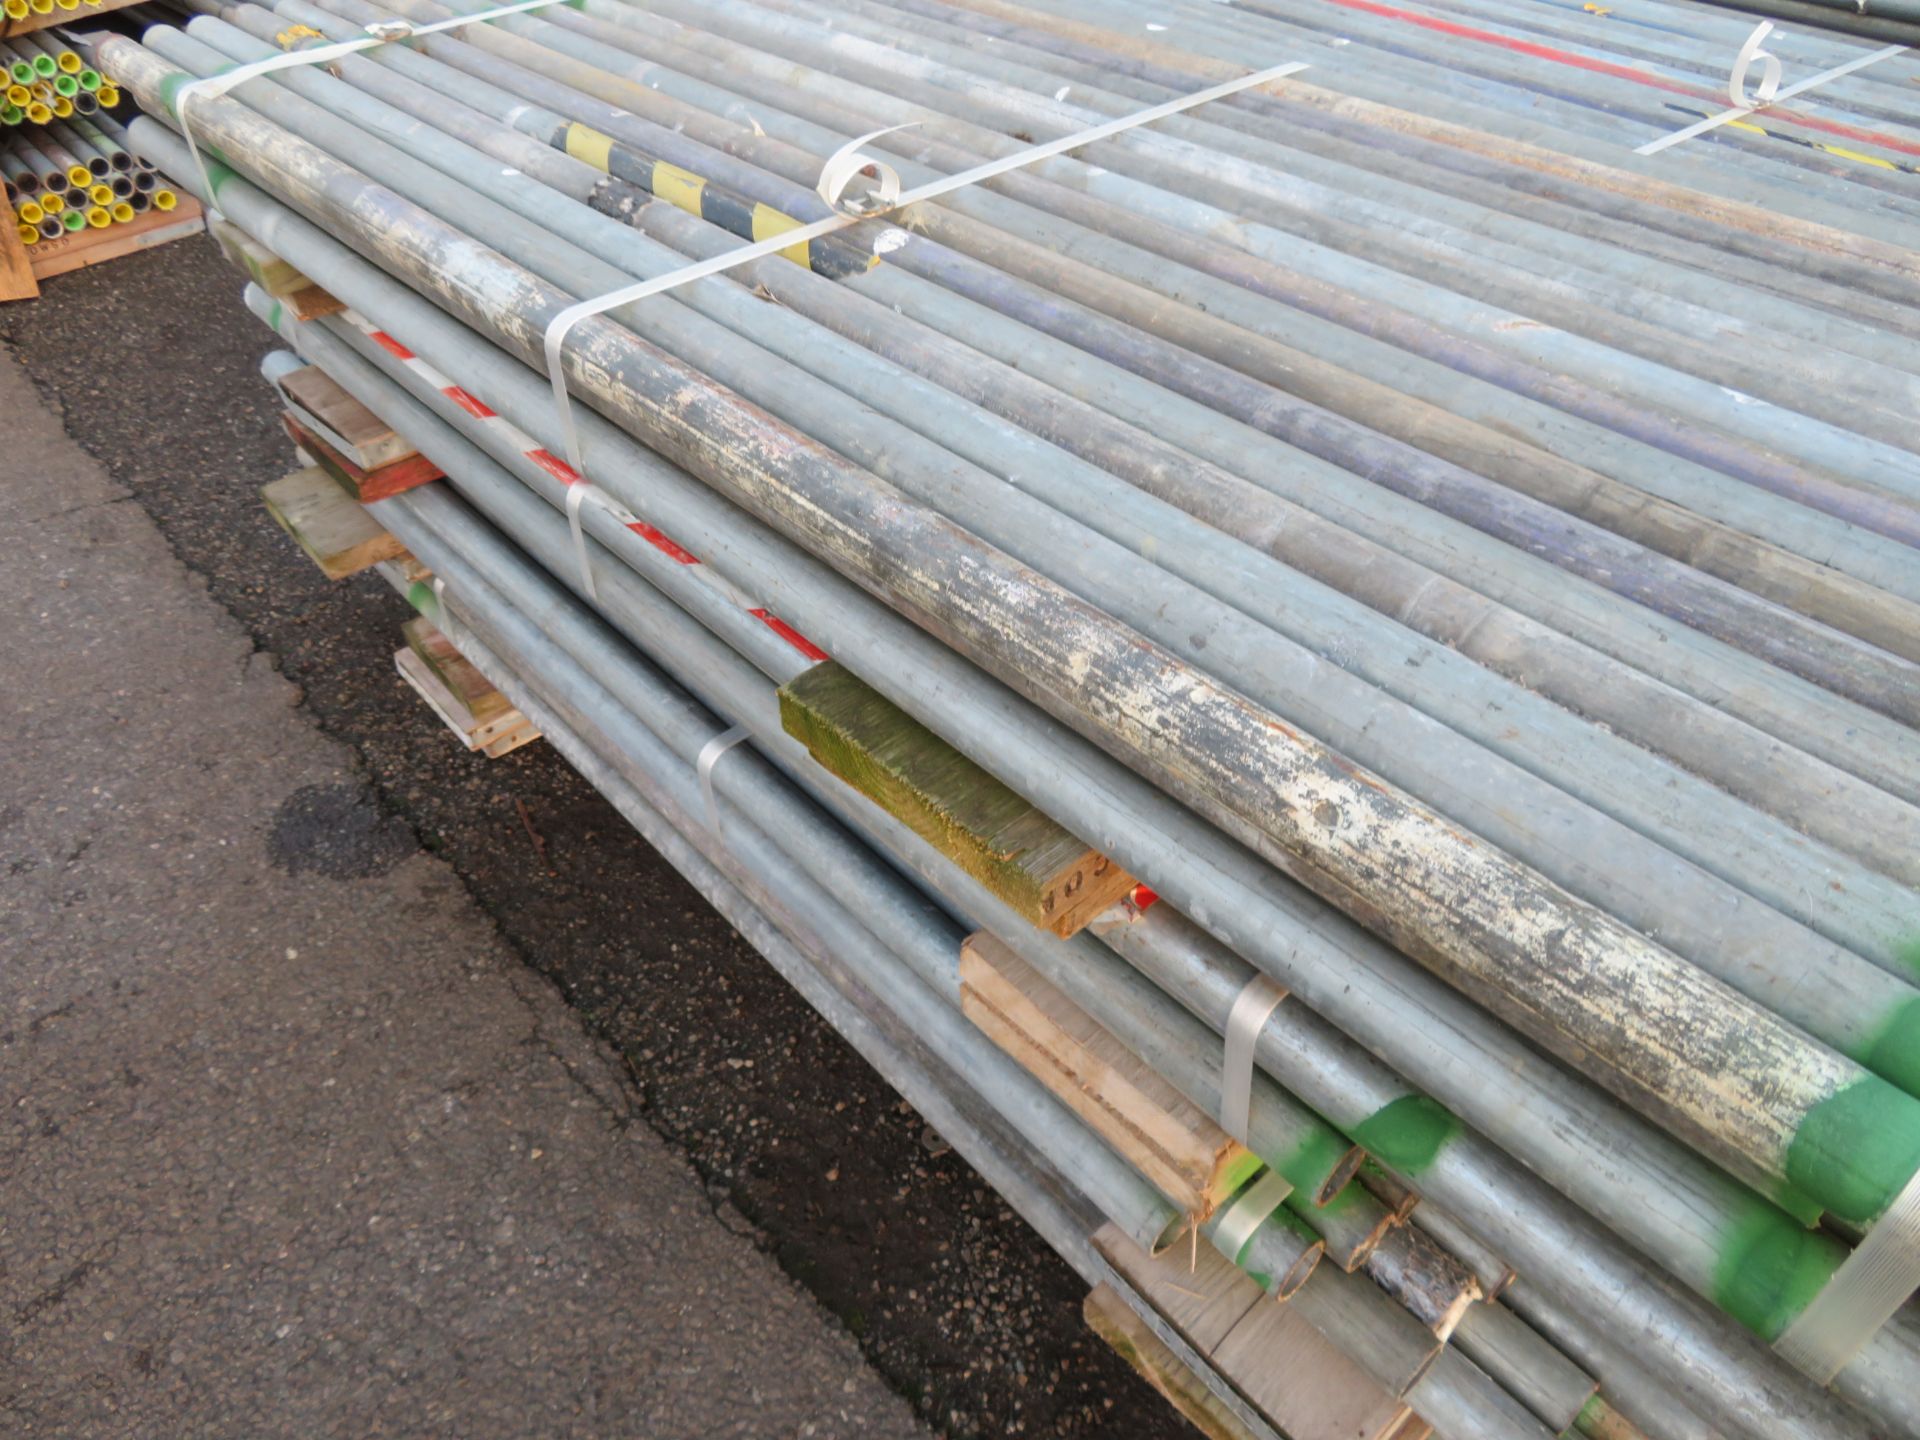 200x Various Length Galvanised Steel Scaffolding Poles. Lengths Range Between 7.5ft - 5ft. - Image 5 of 5